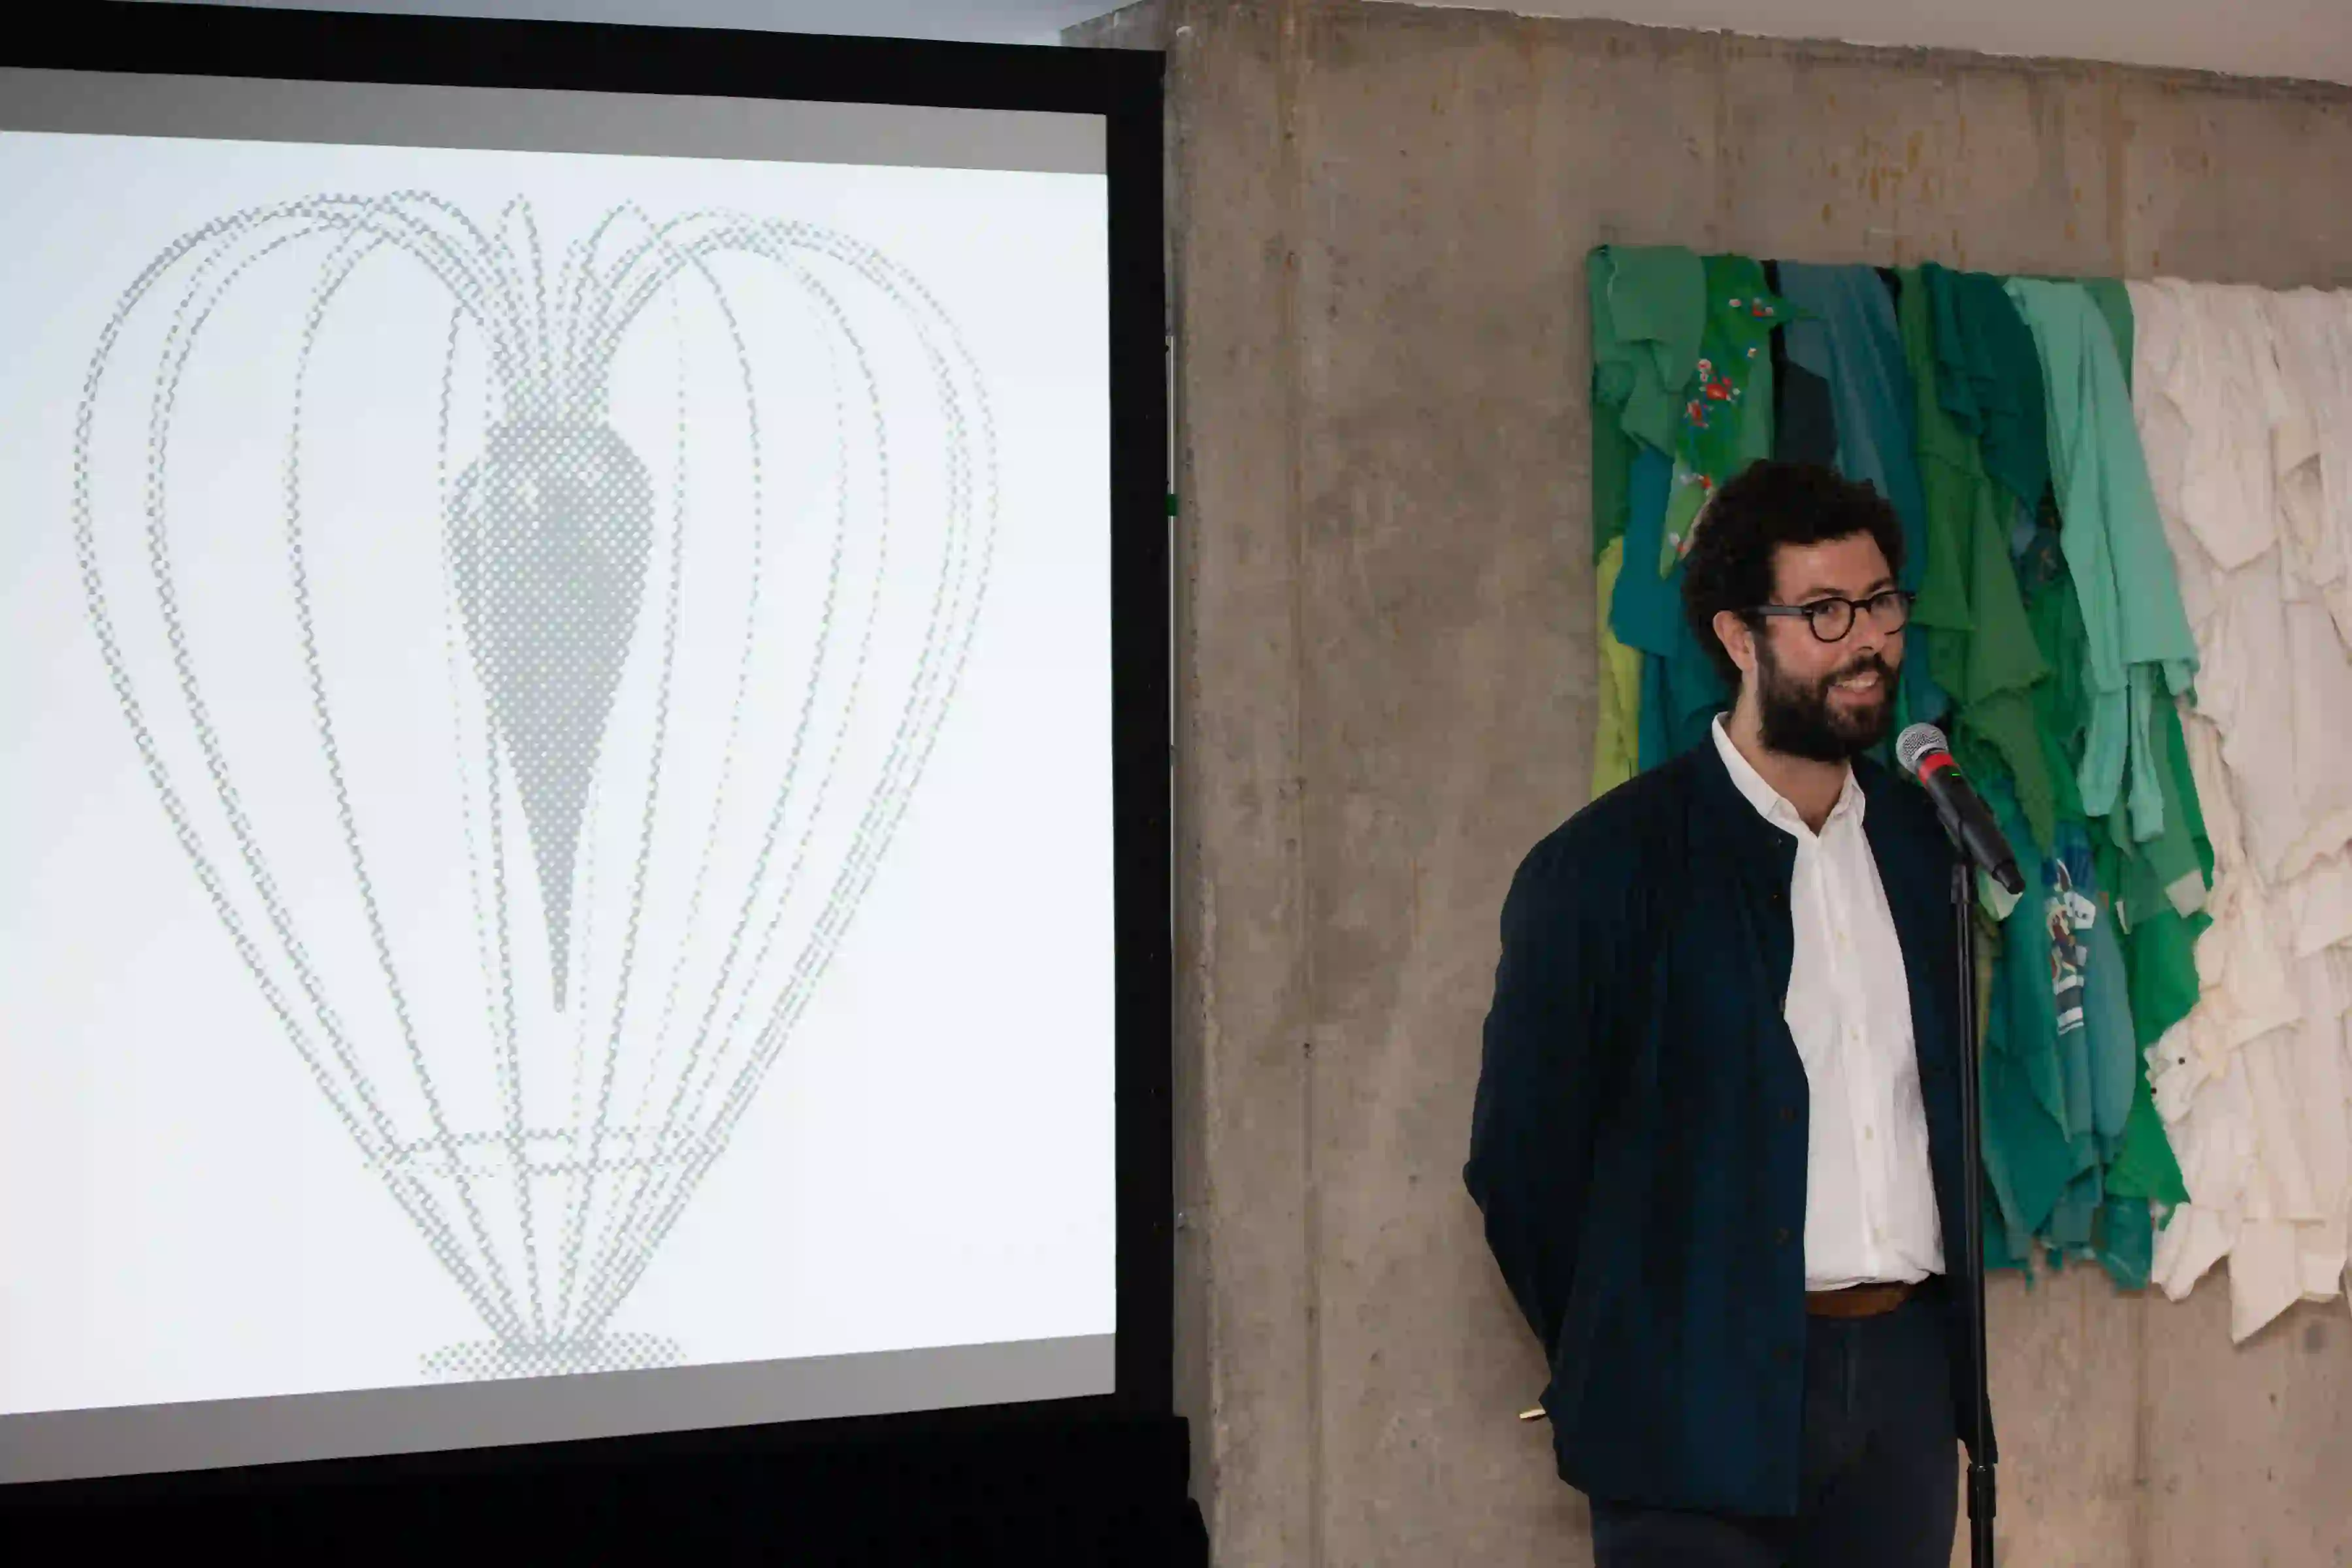 Magazzino's Vittorio Calabrese speaking at the book presentation of Marco Bagnoli, 2019